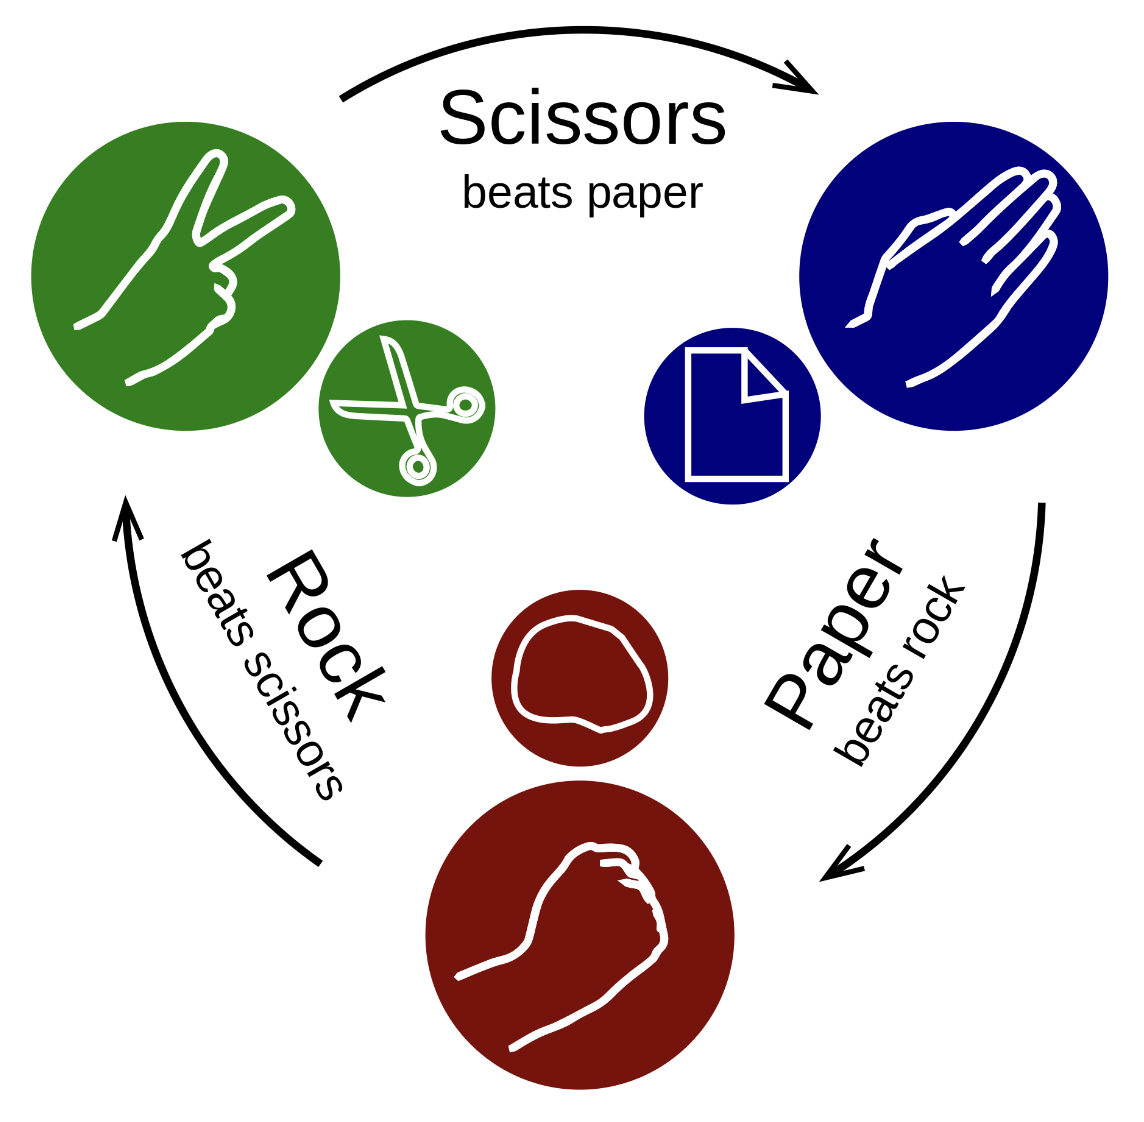 Schematic of rock-paper-scissors from Wikipedia